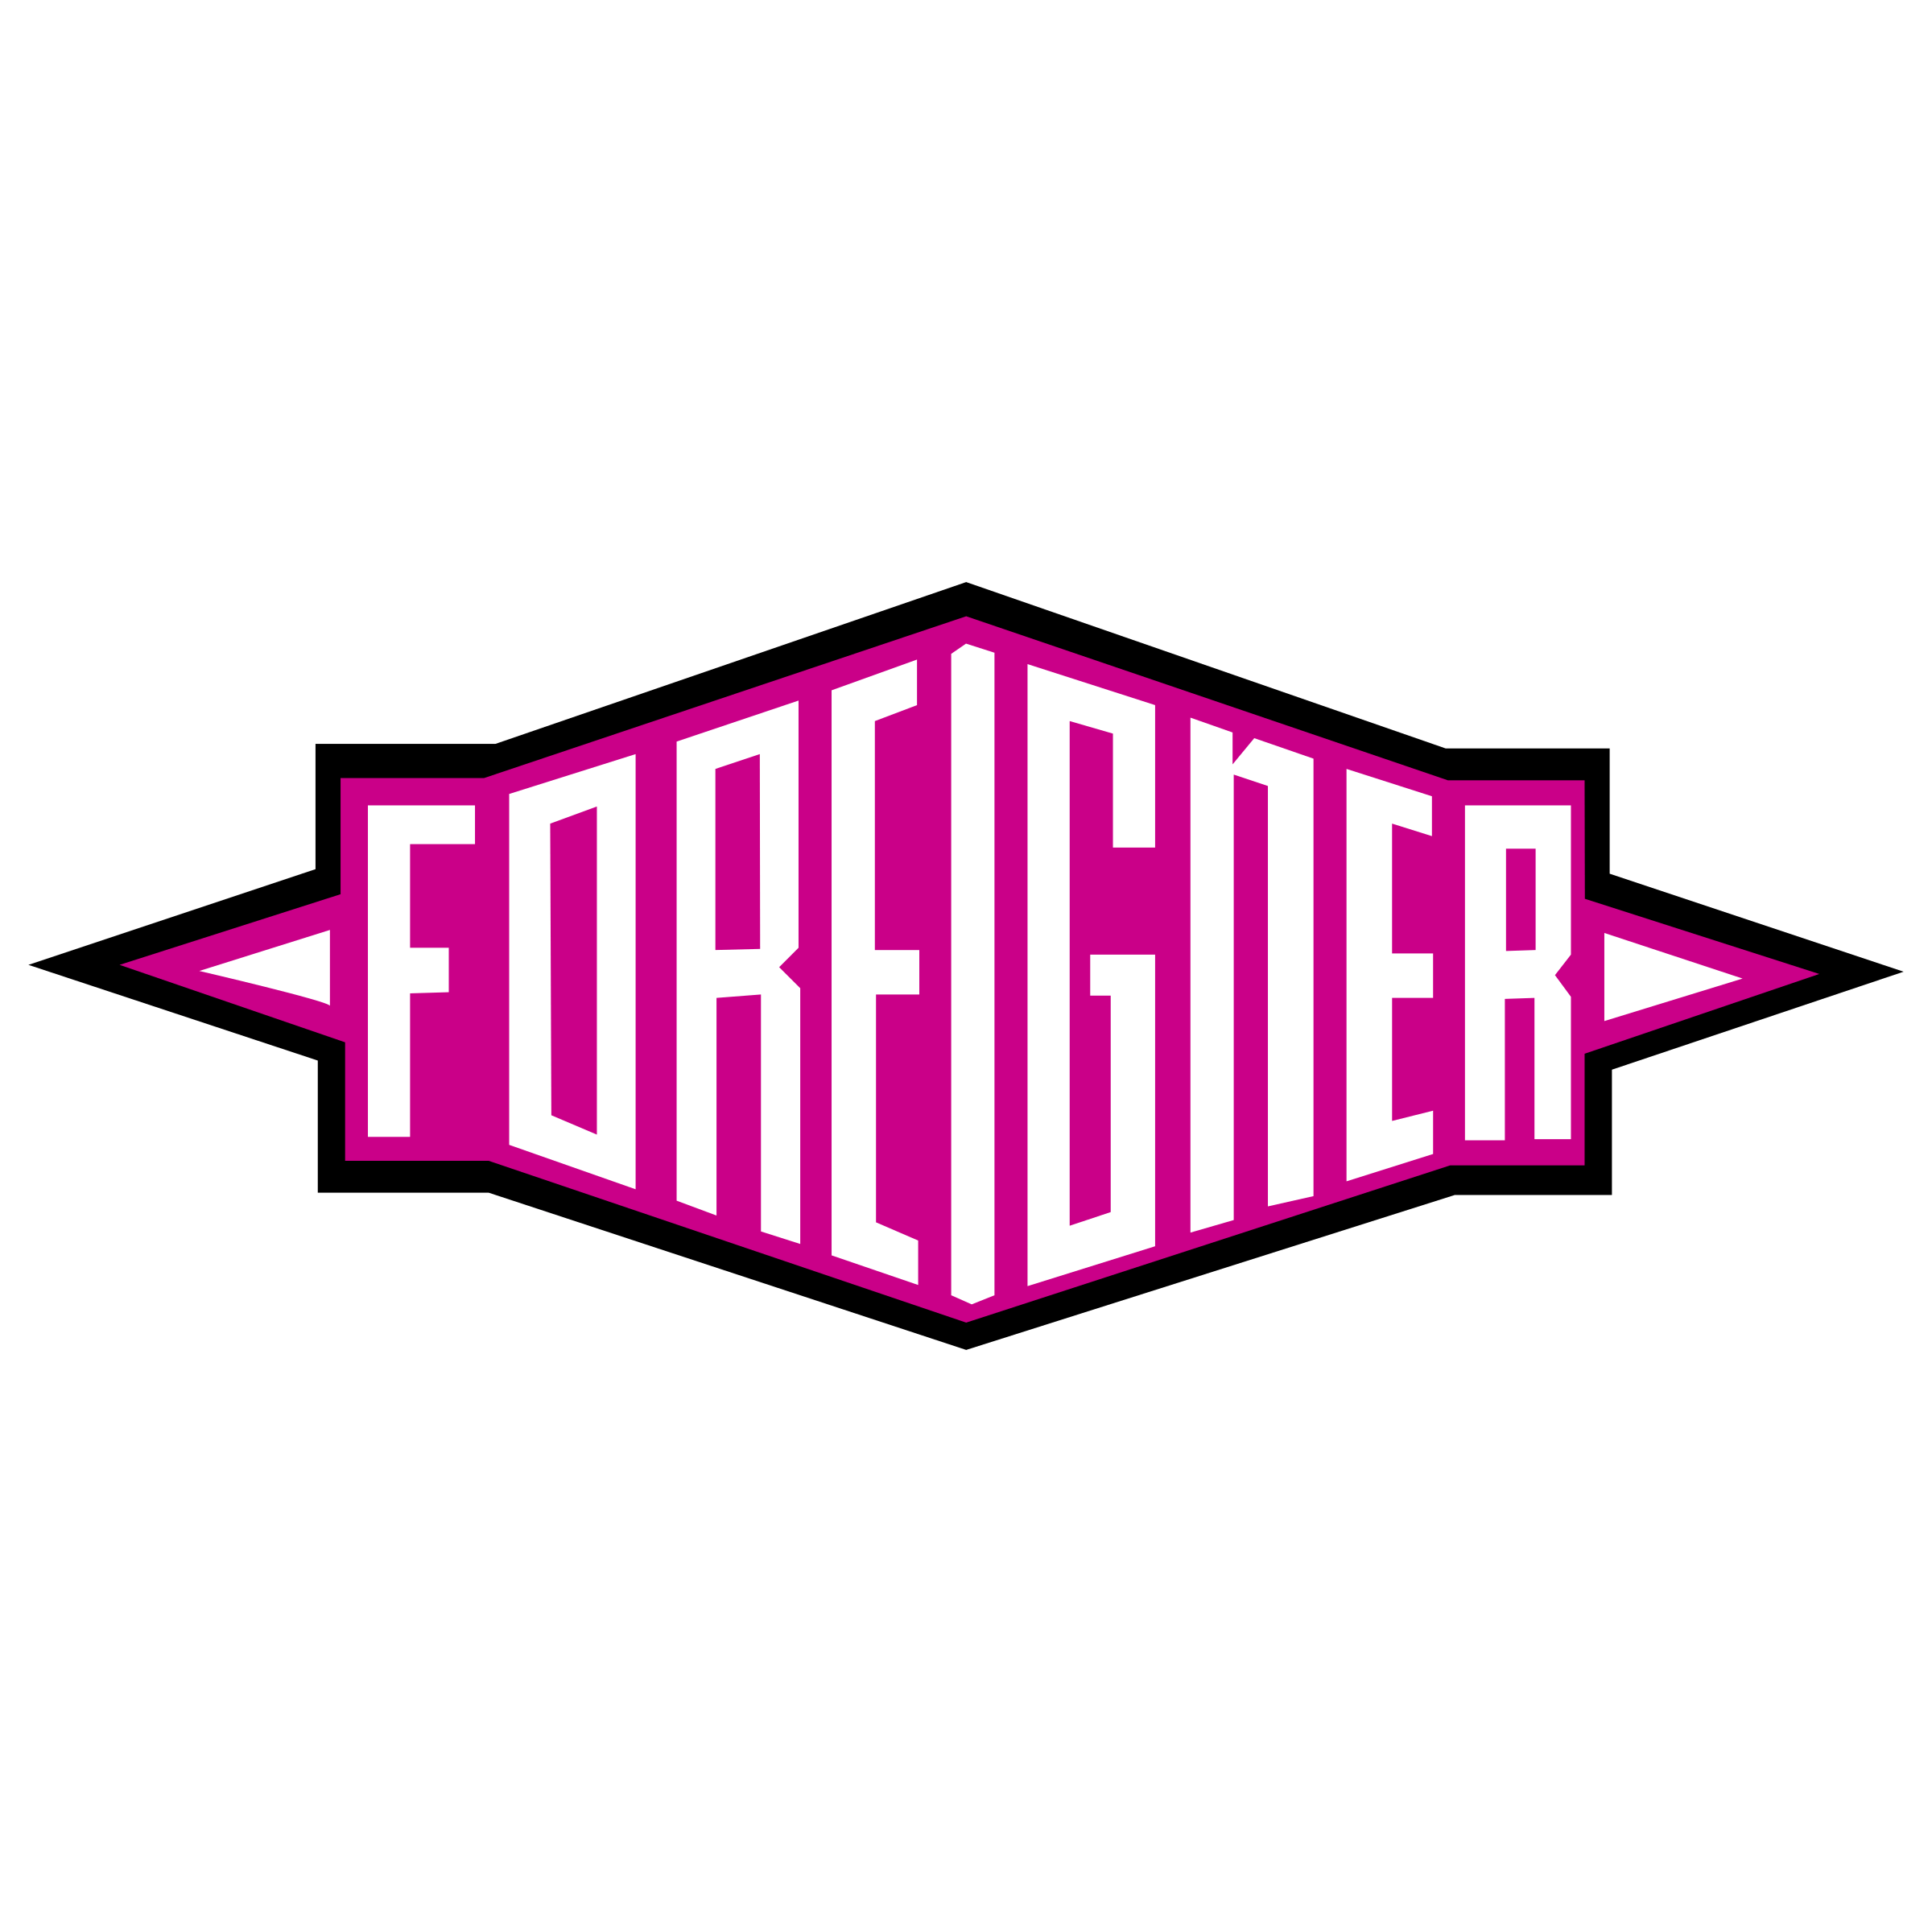 Foreigner Logo - Foreigner Logo PNG Transparent & SVG Vector - Freebie Supply